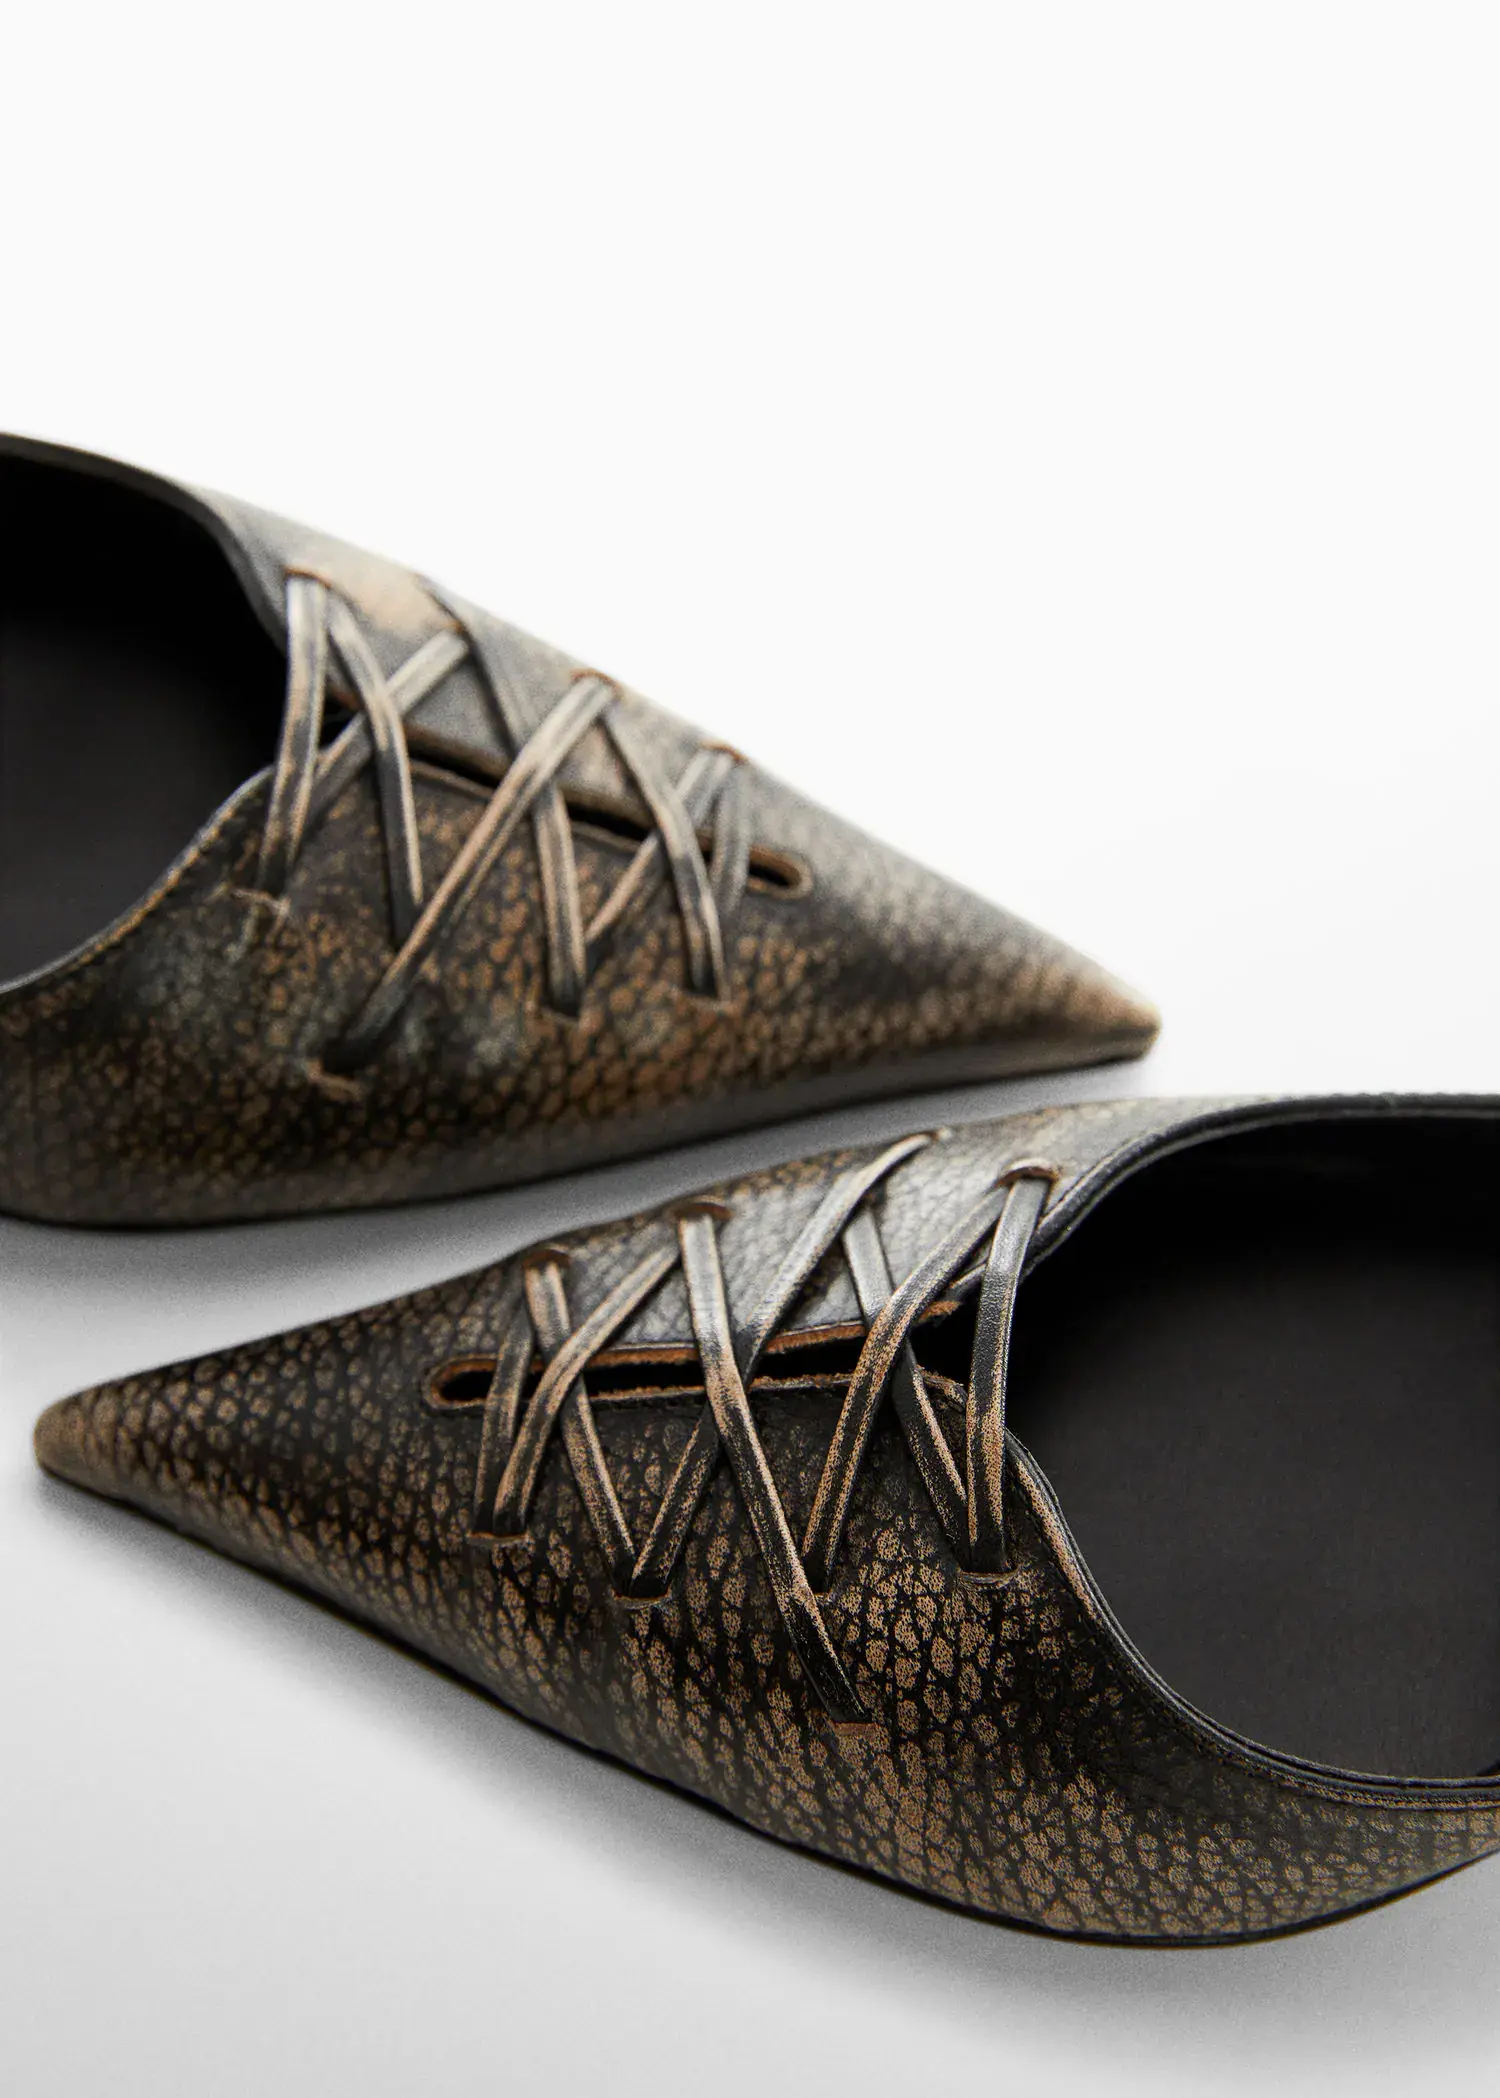 Mango Pointed toe leather shoes. 3